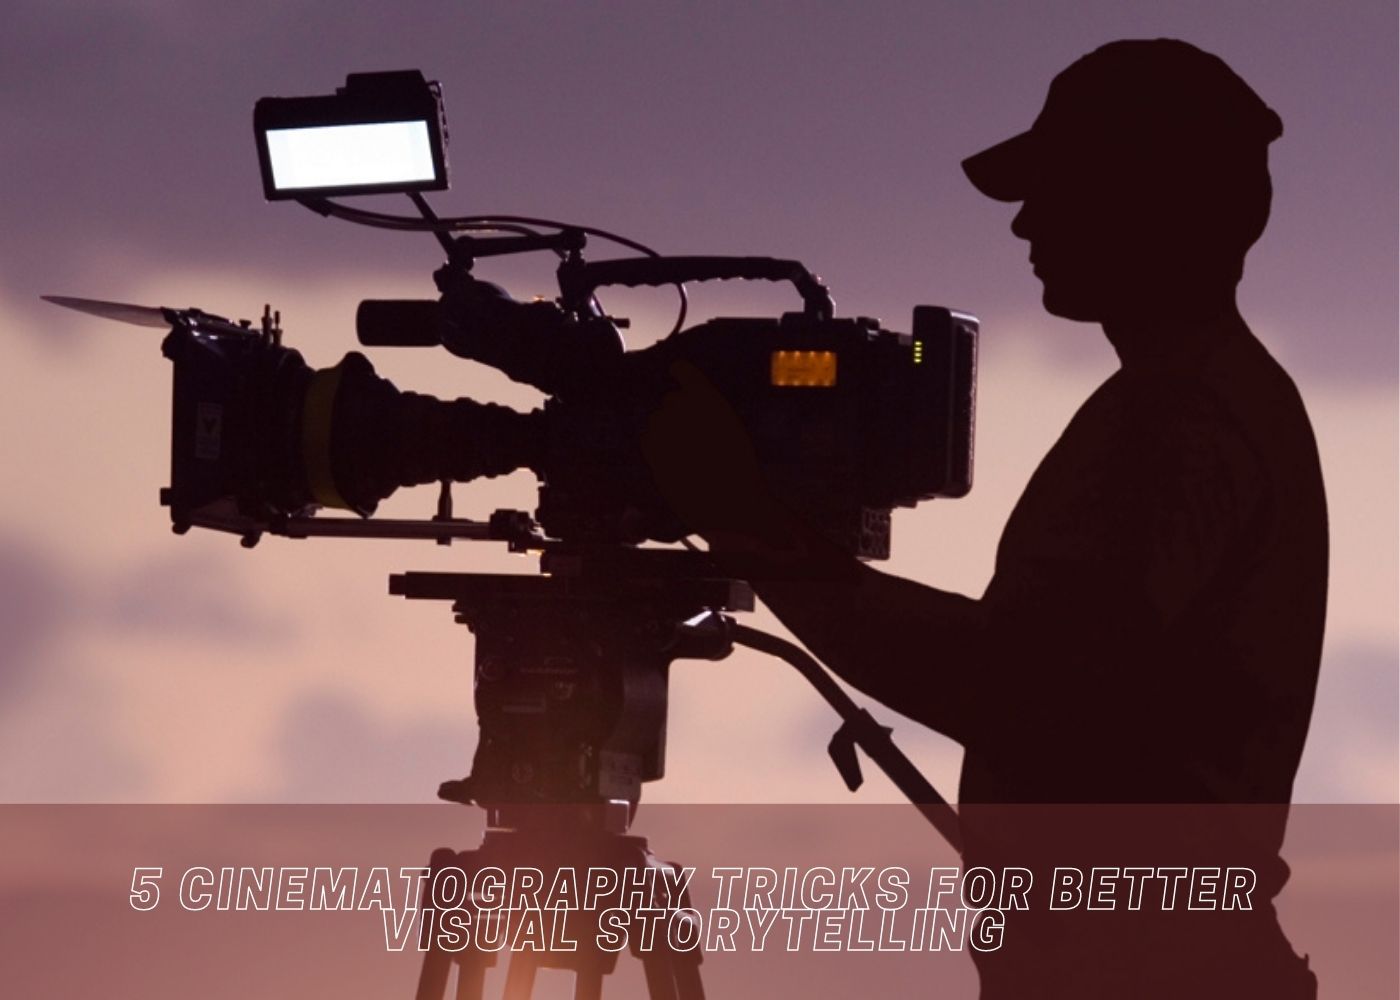 5 Cinematography Tricks for Better Visual Storytelling 